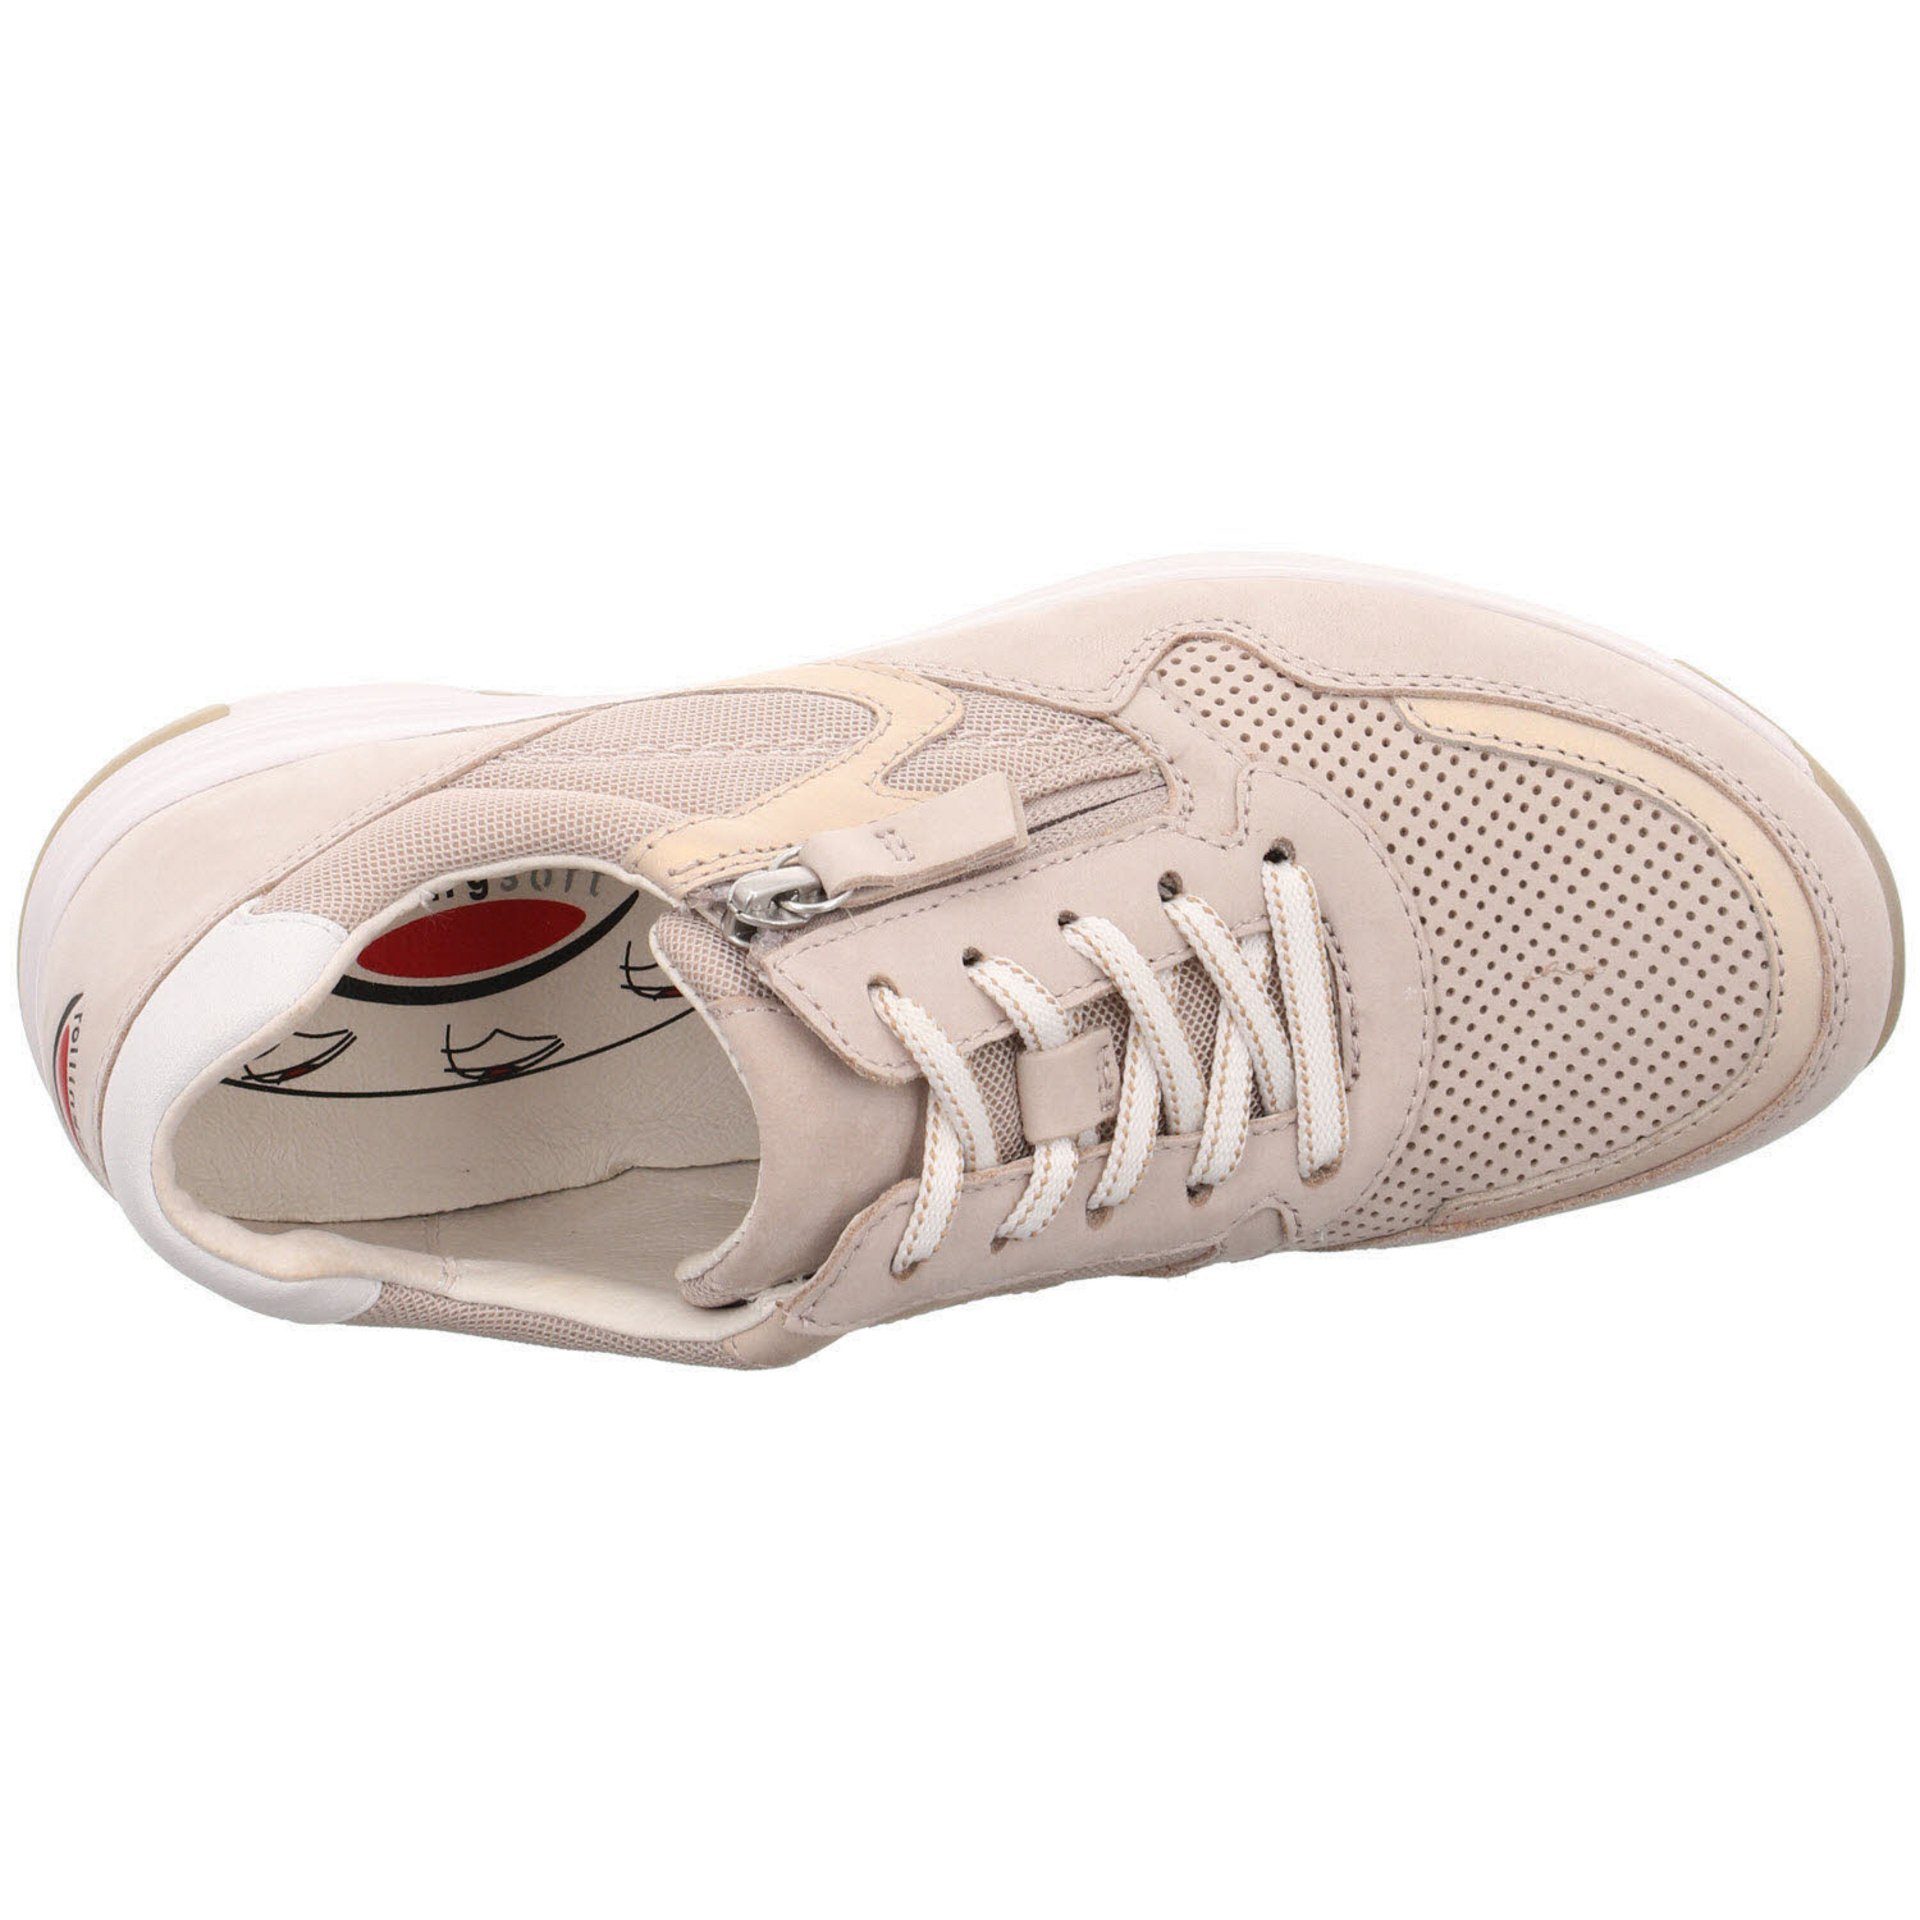 Damen Gabor 31) Schuhe Leder-/Textilkombination / Rollingsoft Sneaker Beige Sneaker (puder/weiss Schnürschuh